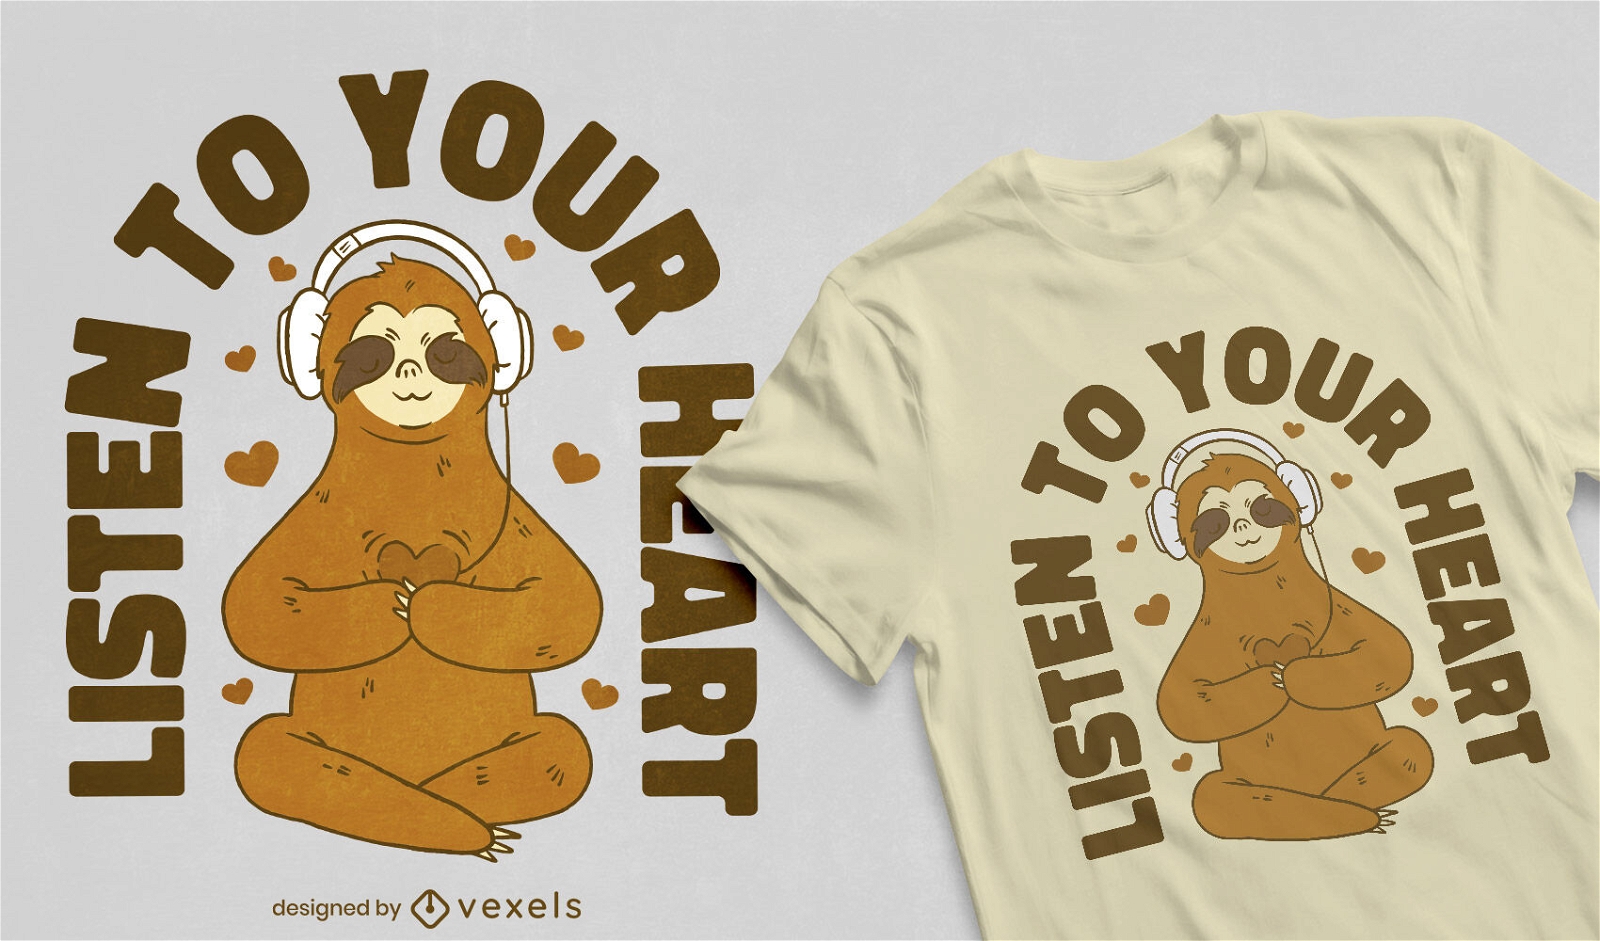 Sloth with headphones t-shirt design